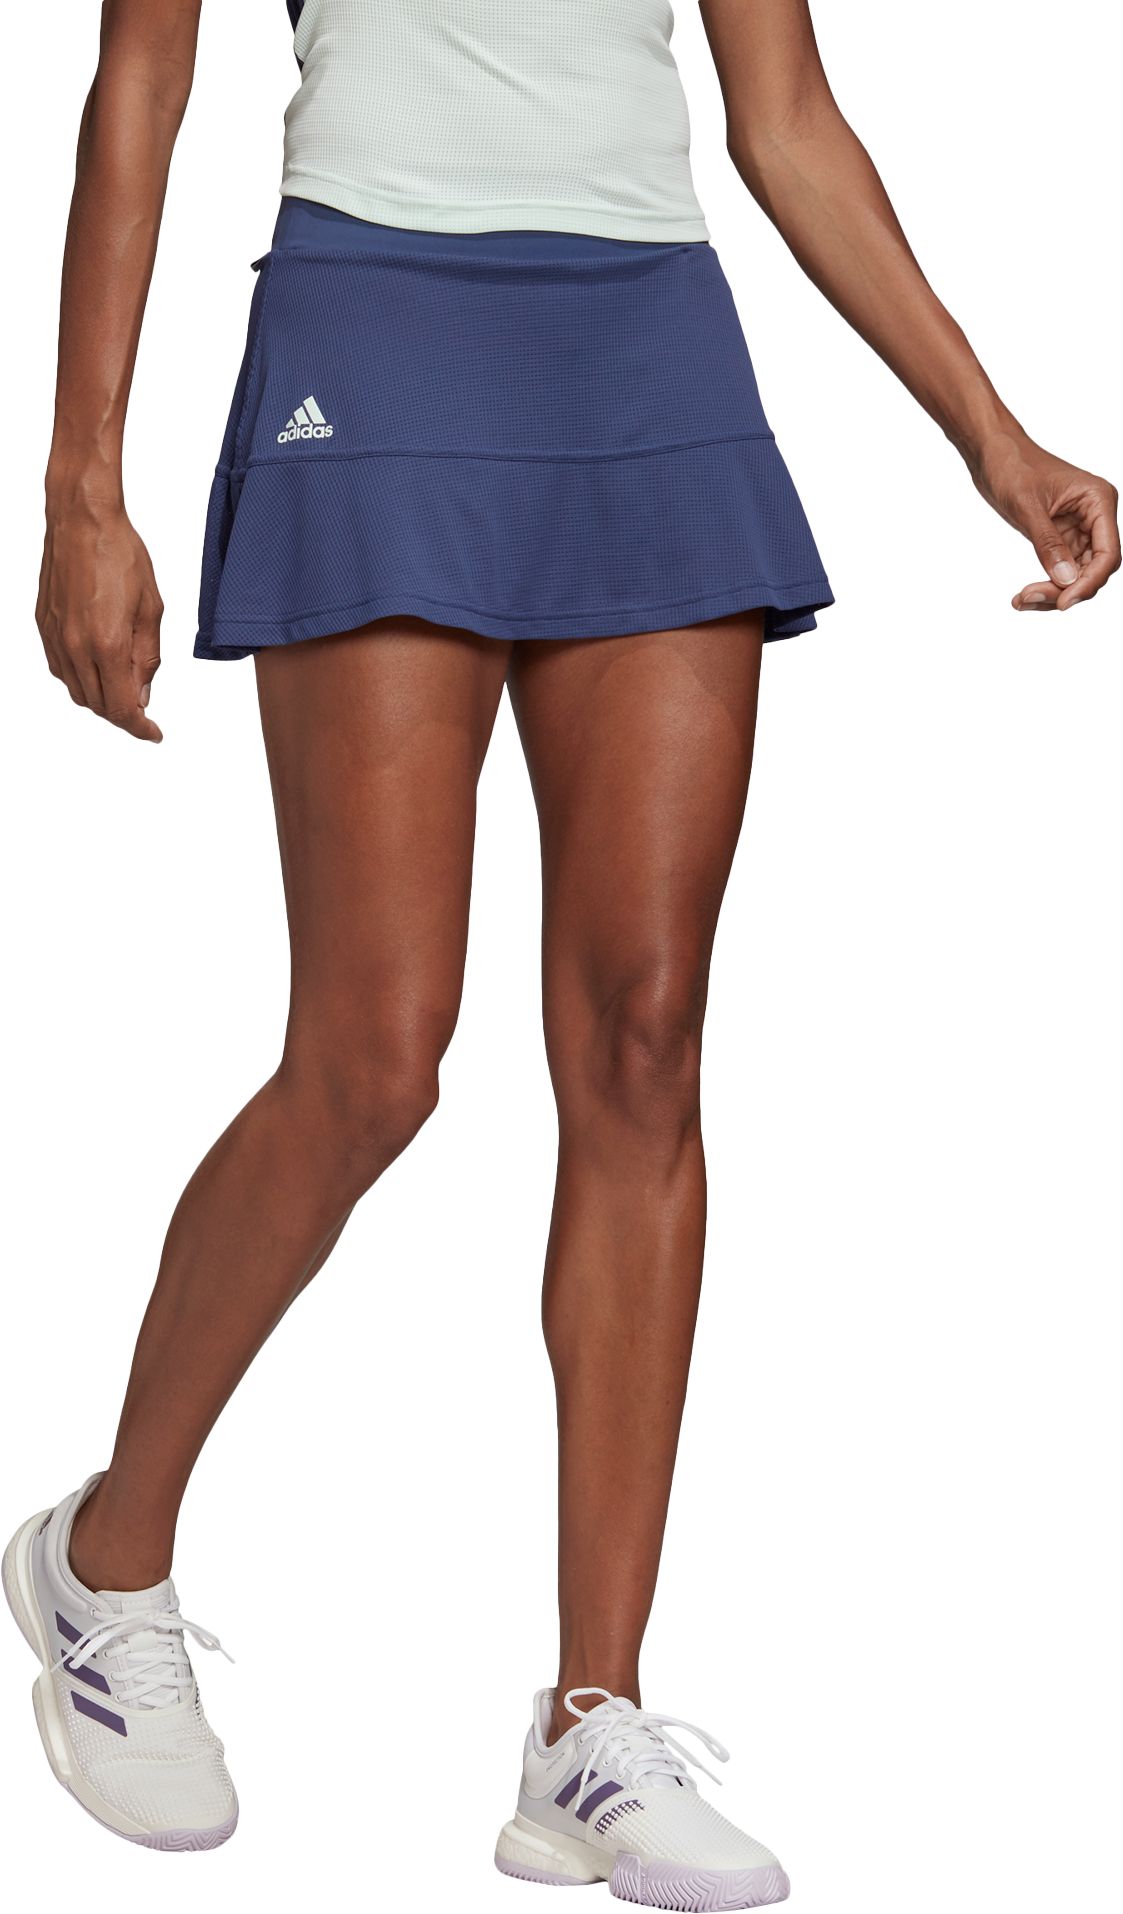 adidas long tennis skirt